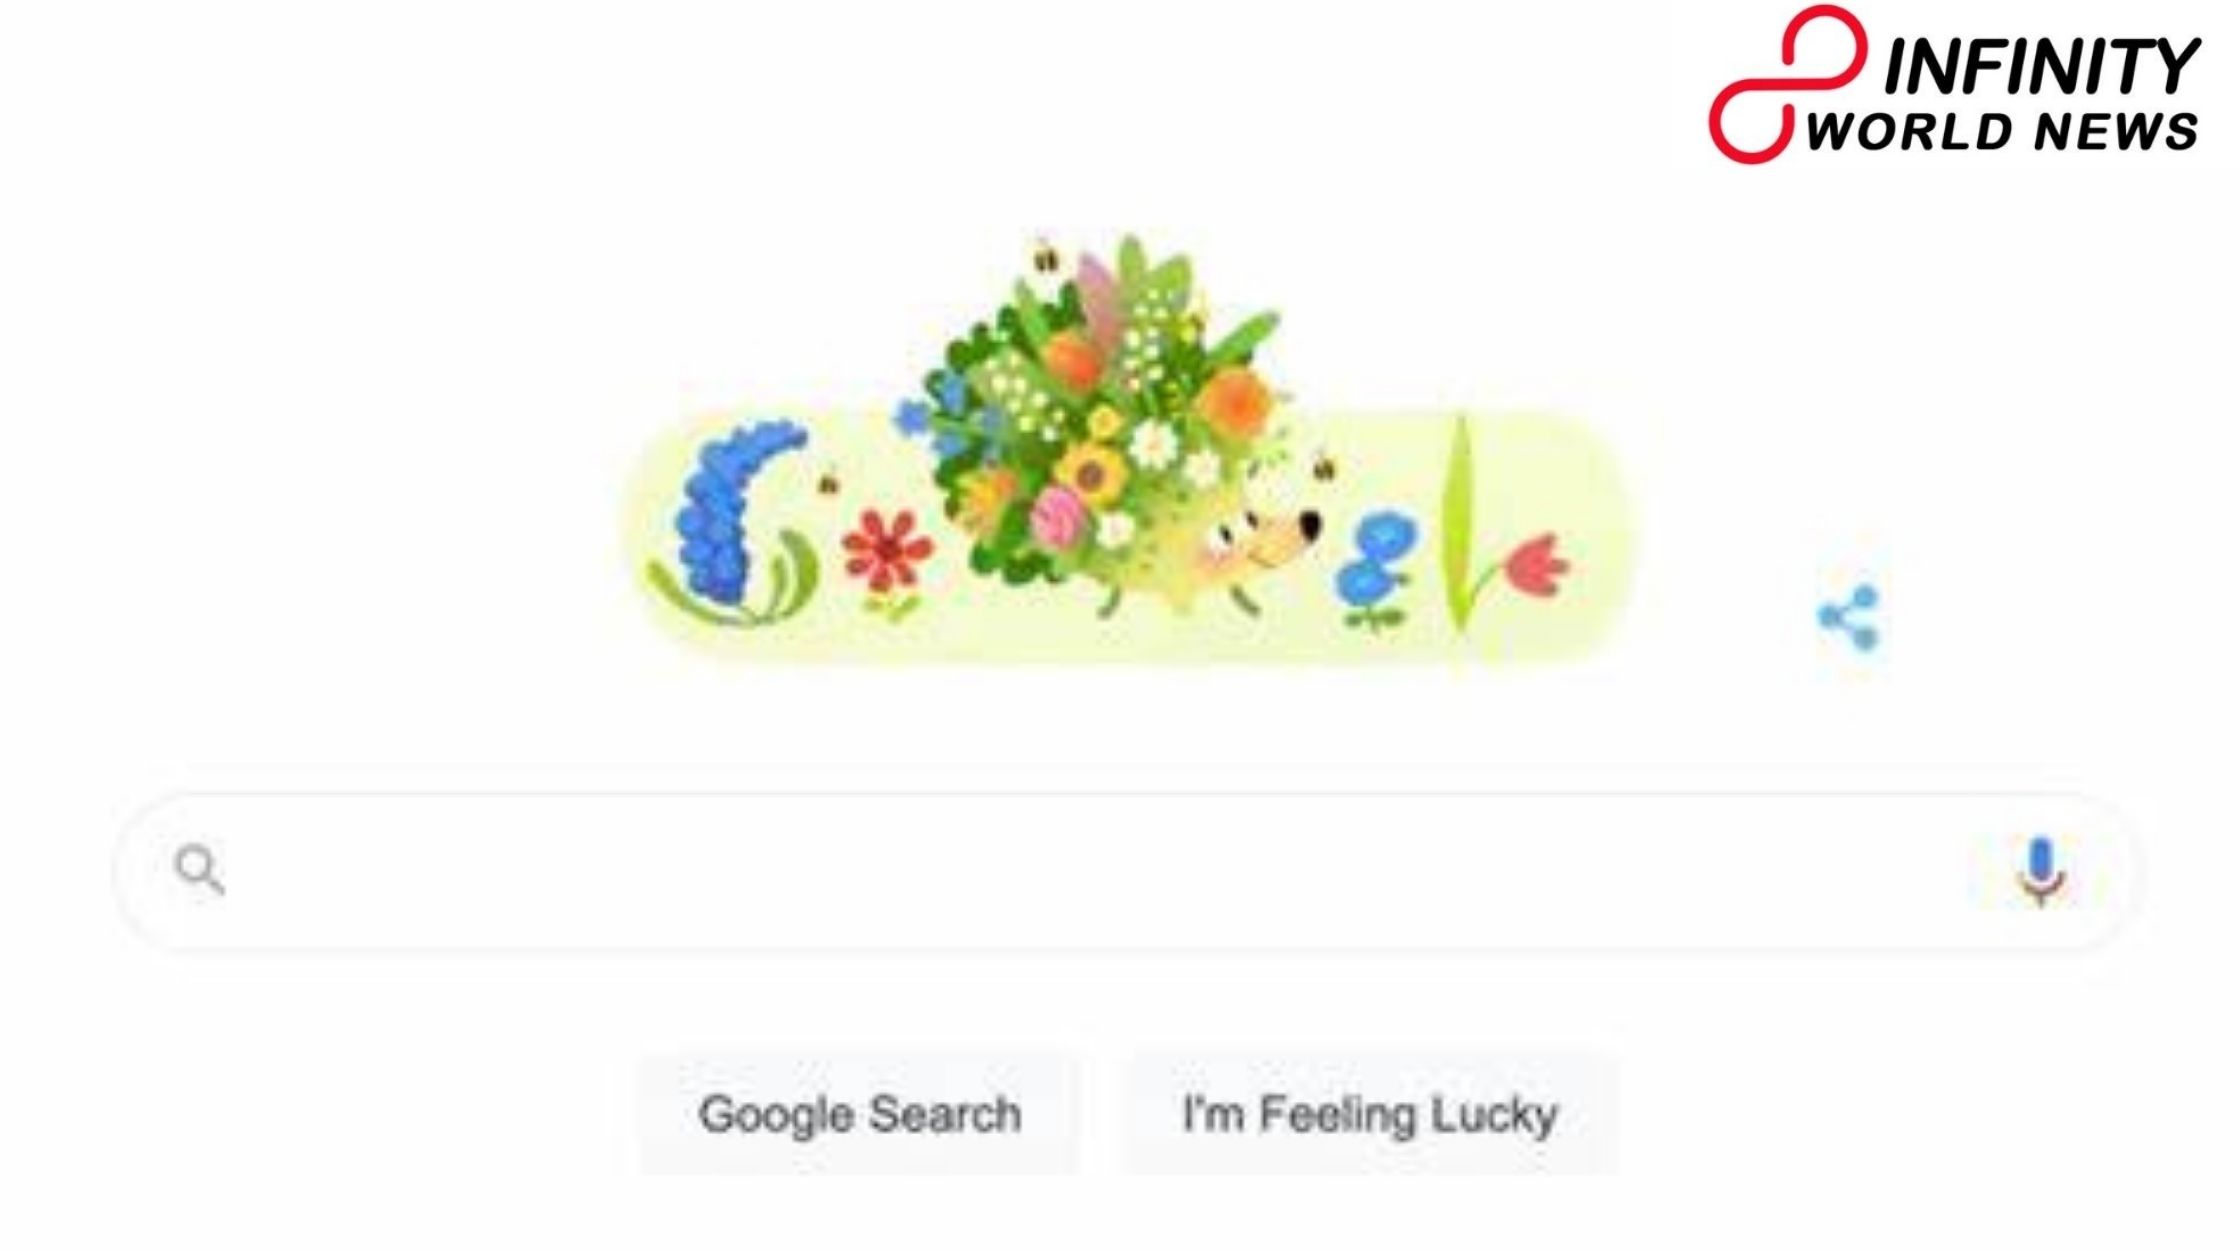 Spring Season 2021: Google Doodle Rejoices Equinox By Animated Hedgehog, Flowers